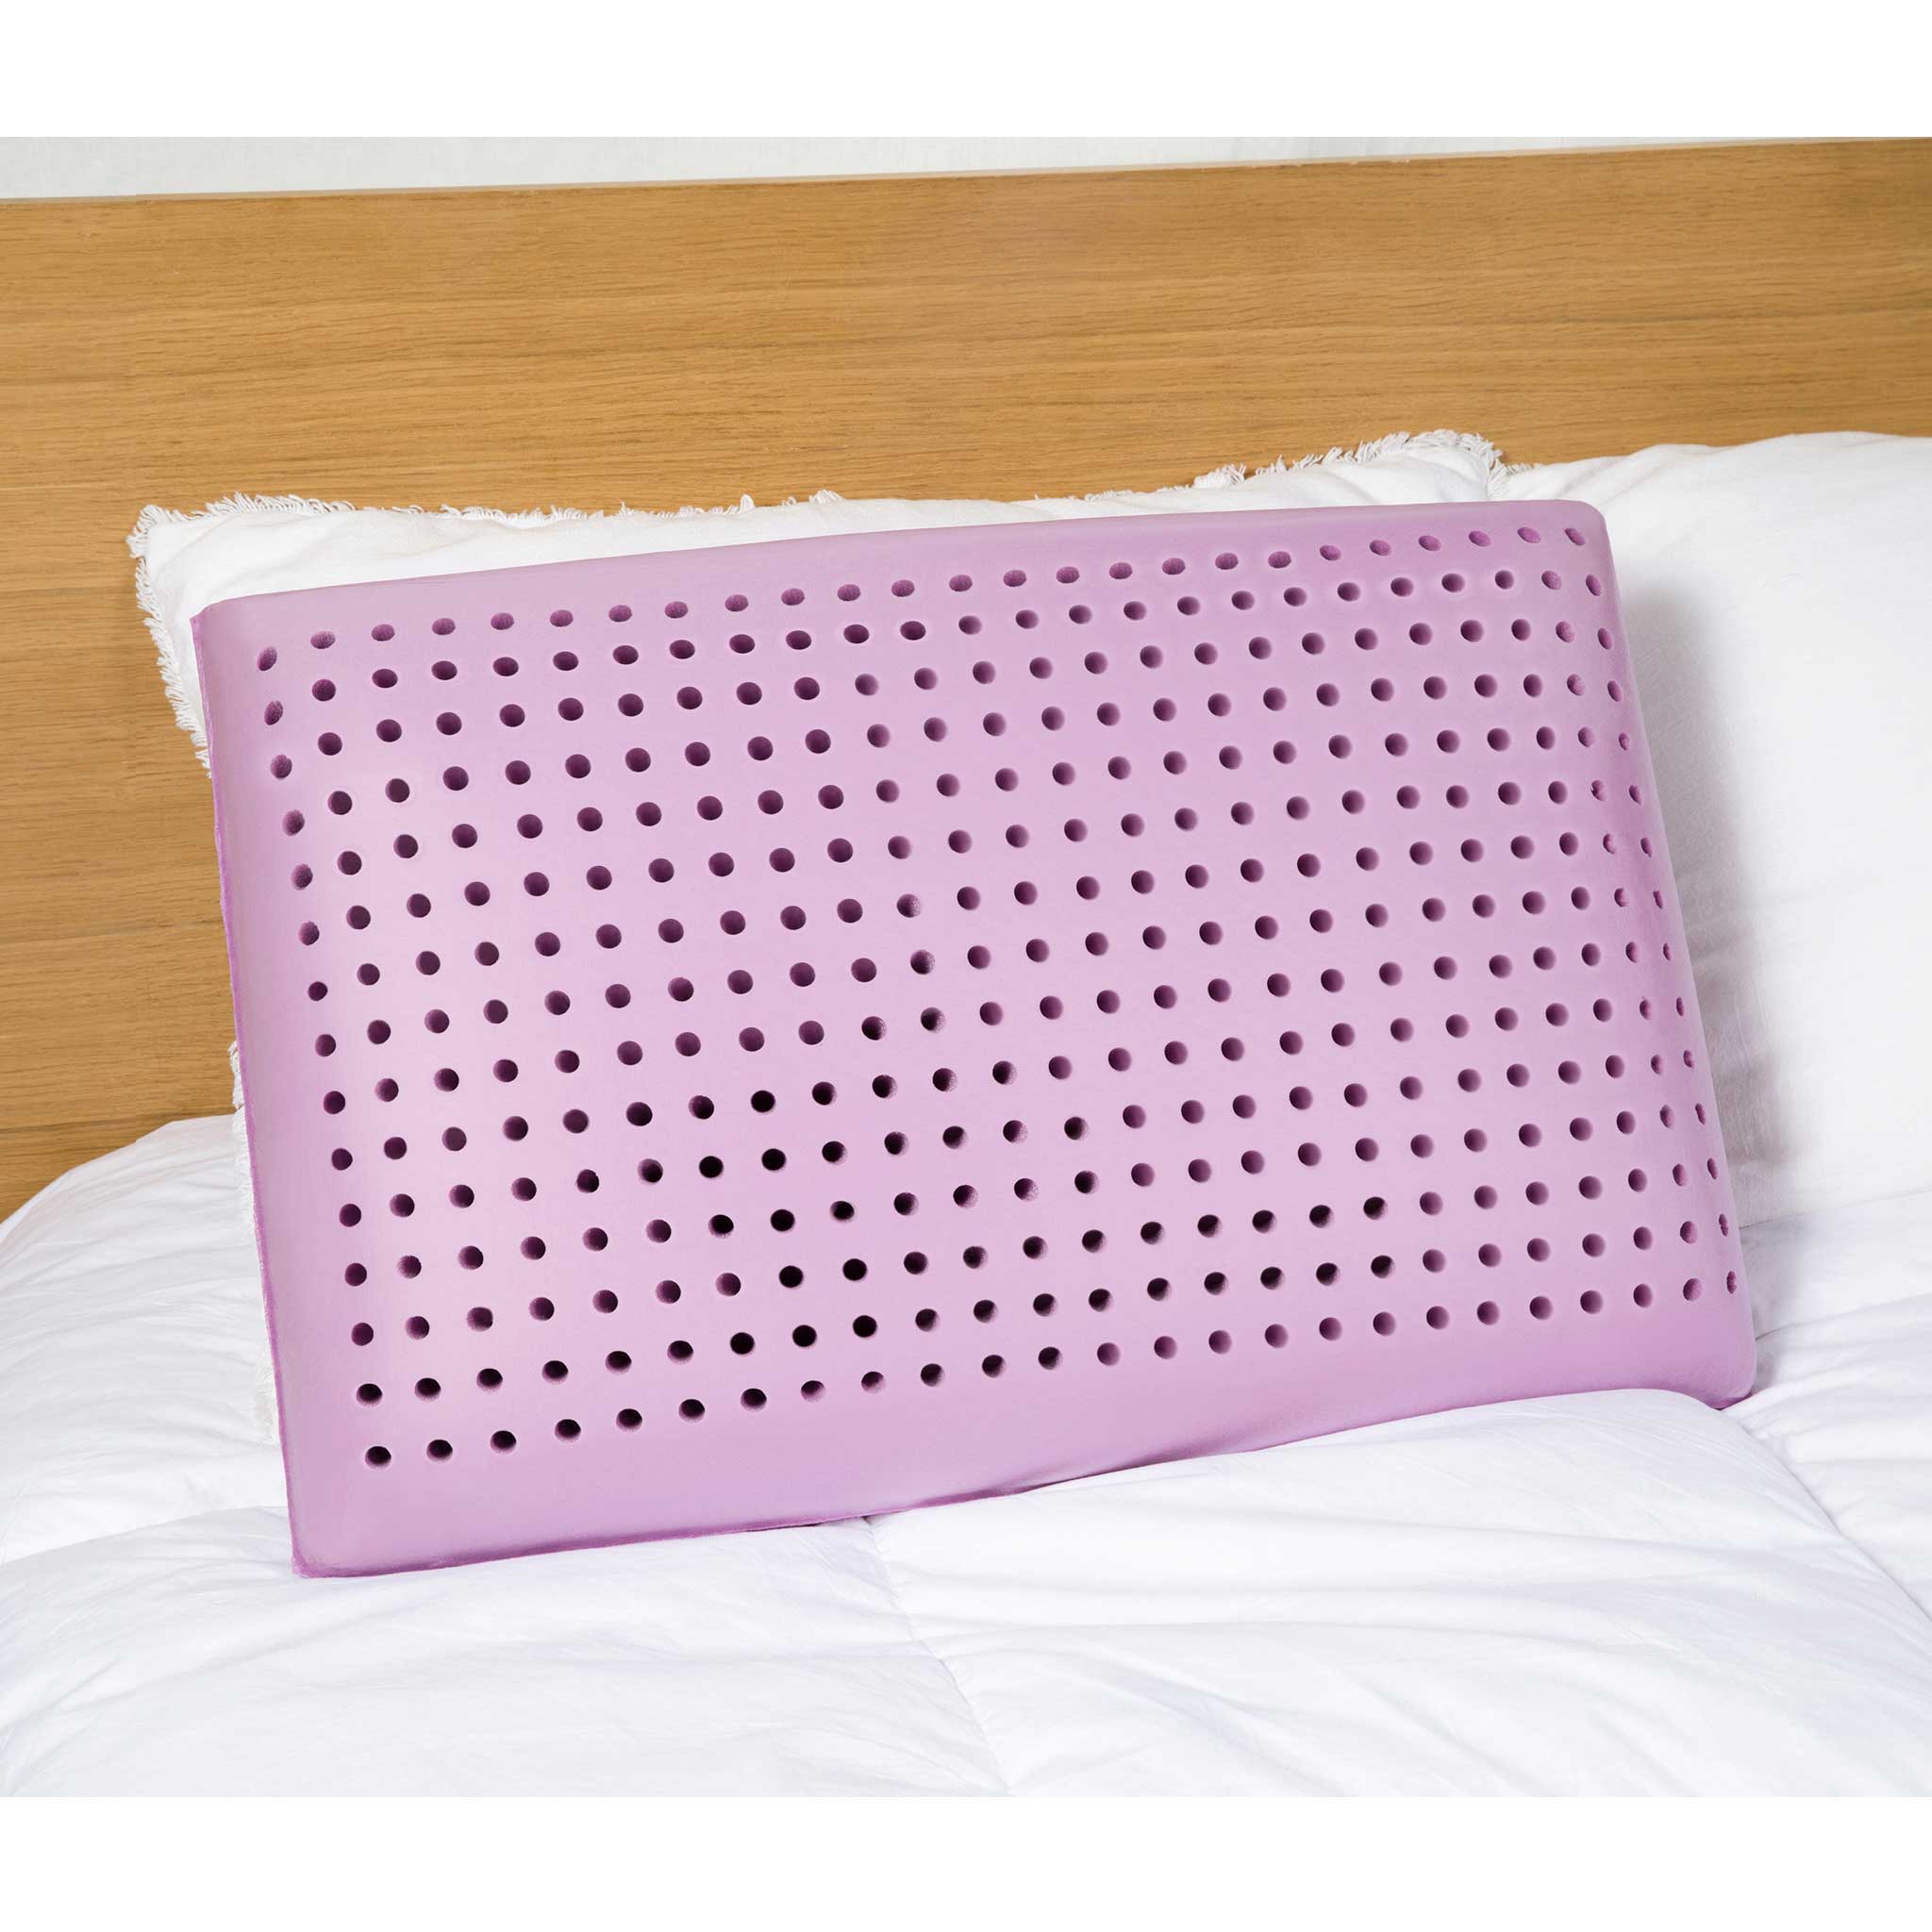 ZenRelief Lavender Memory Foam Aromatherapy Pillow (FREE Sleep Mask + 100-Day Sleep Trial)